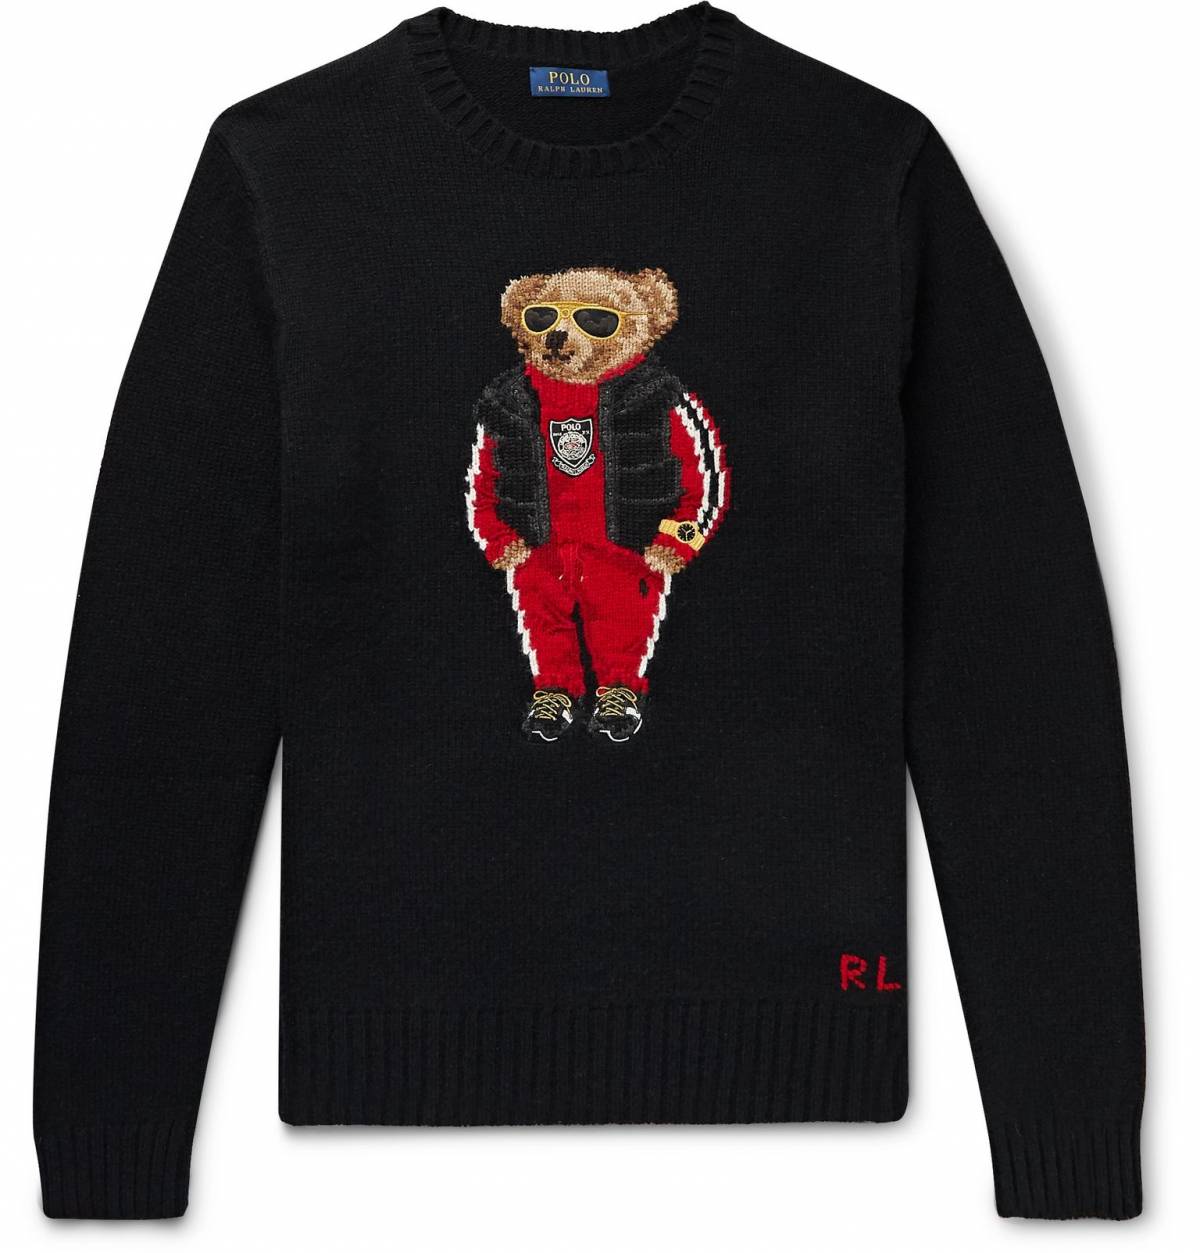 Ralph Lauren's Polo Bear Sweater Is A Men's Winter Style Essential